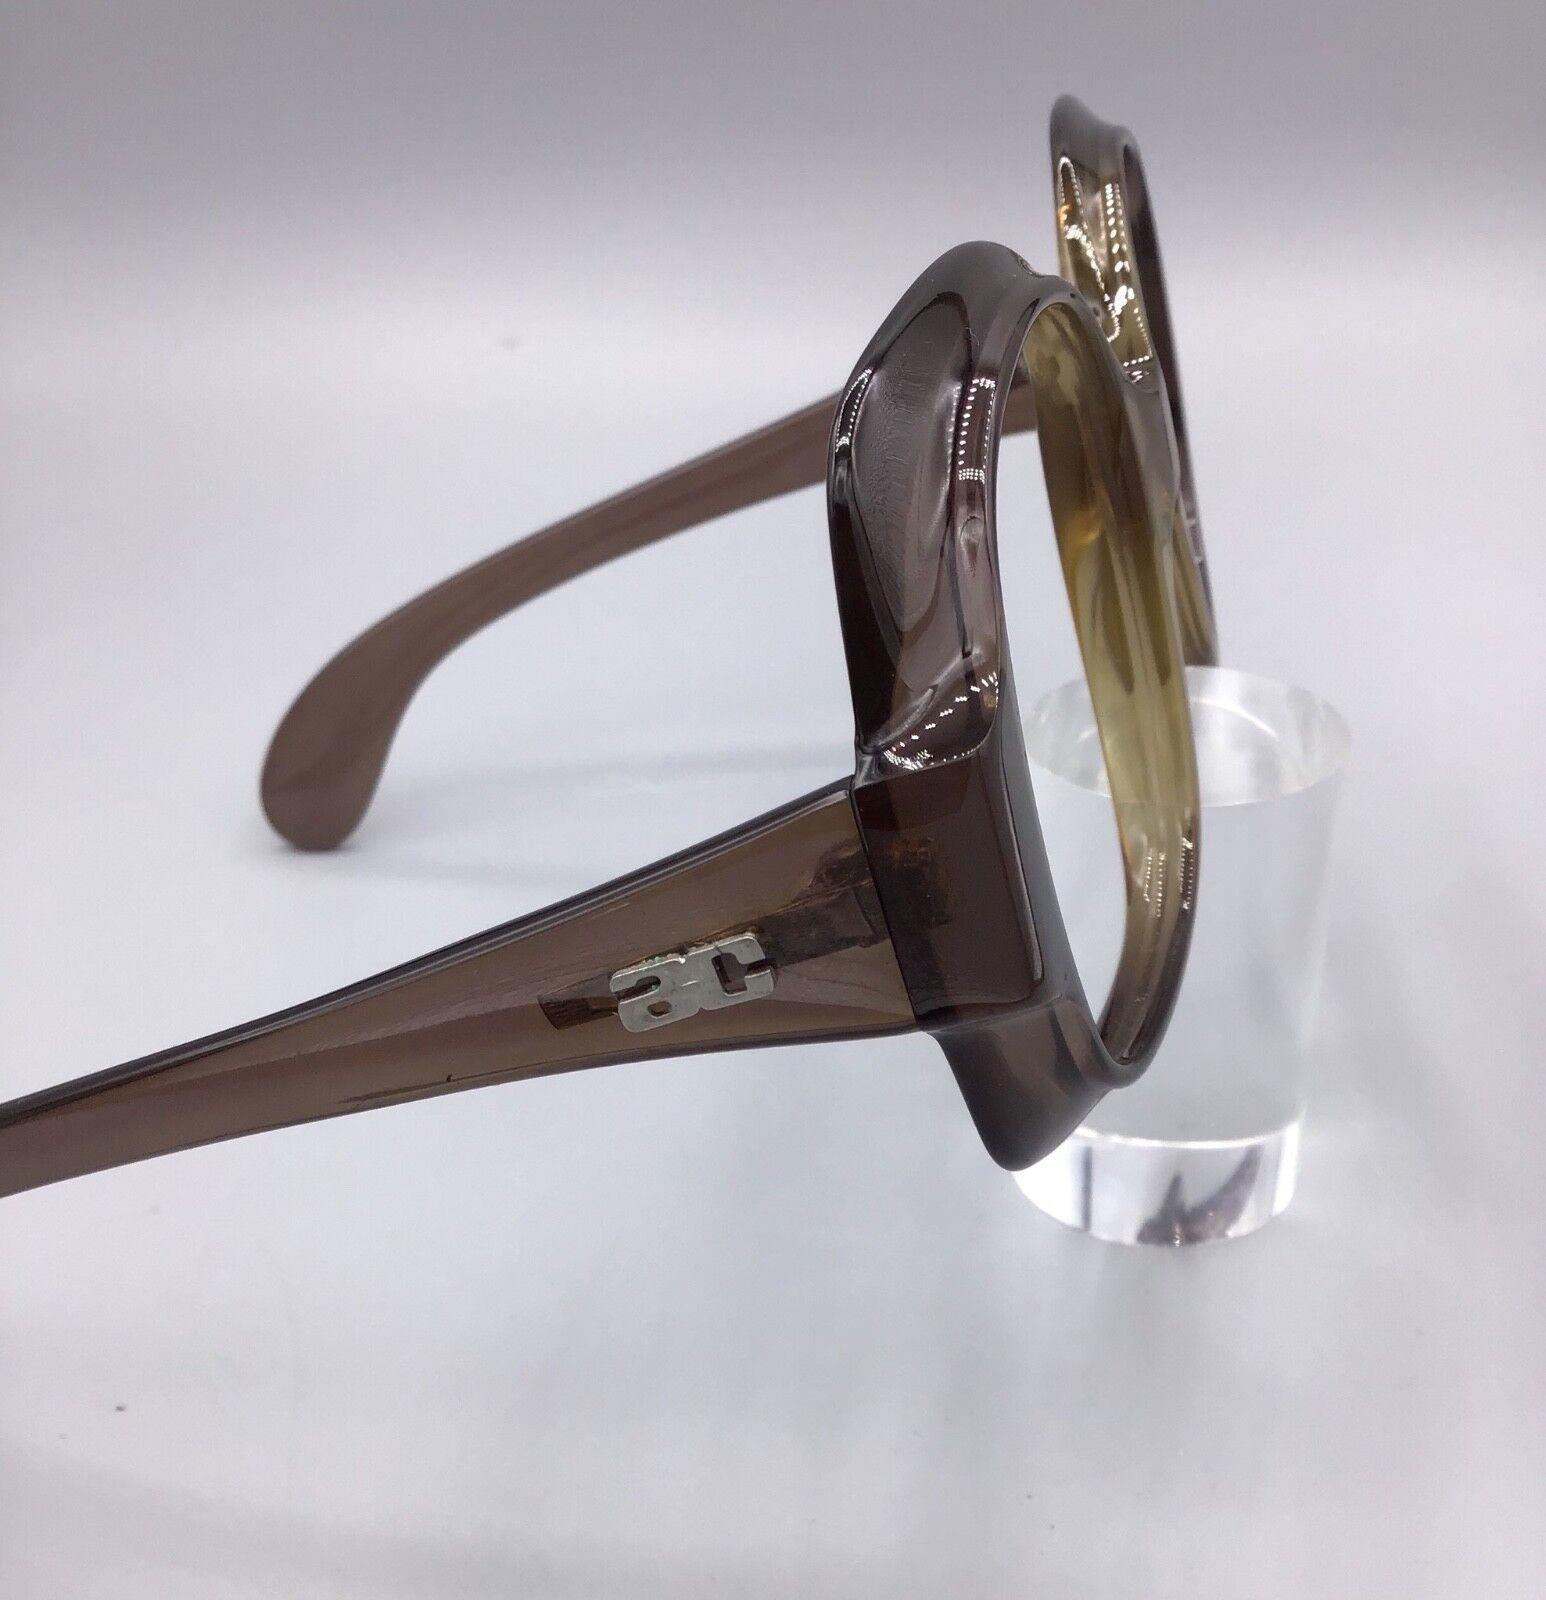 Marwitz occhiale vintage frame brillen gafas lunettes glasses eyewear model 221 AS-2 7302